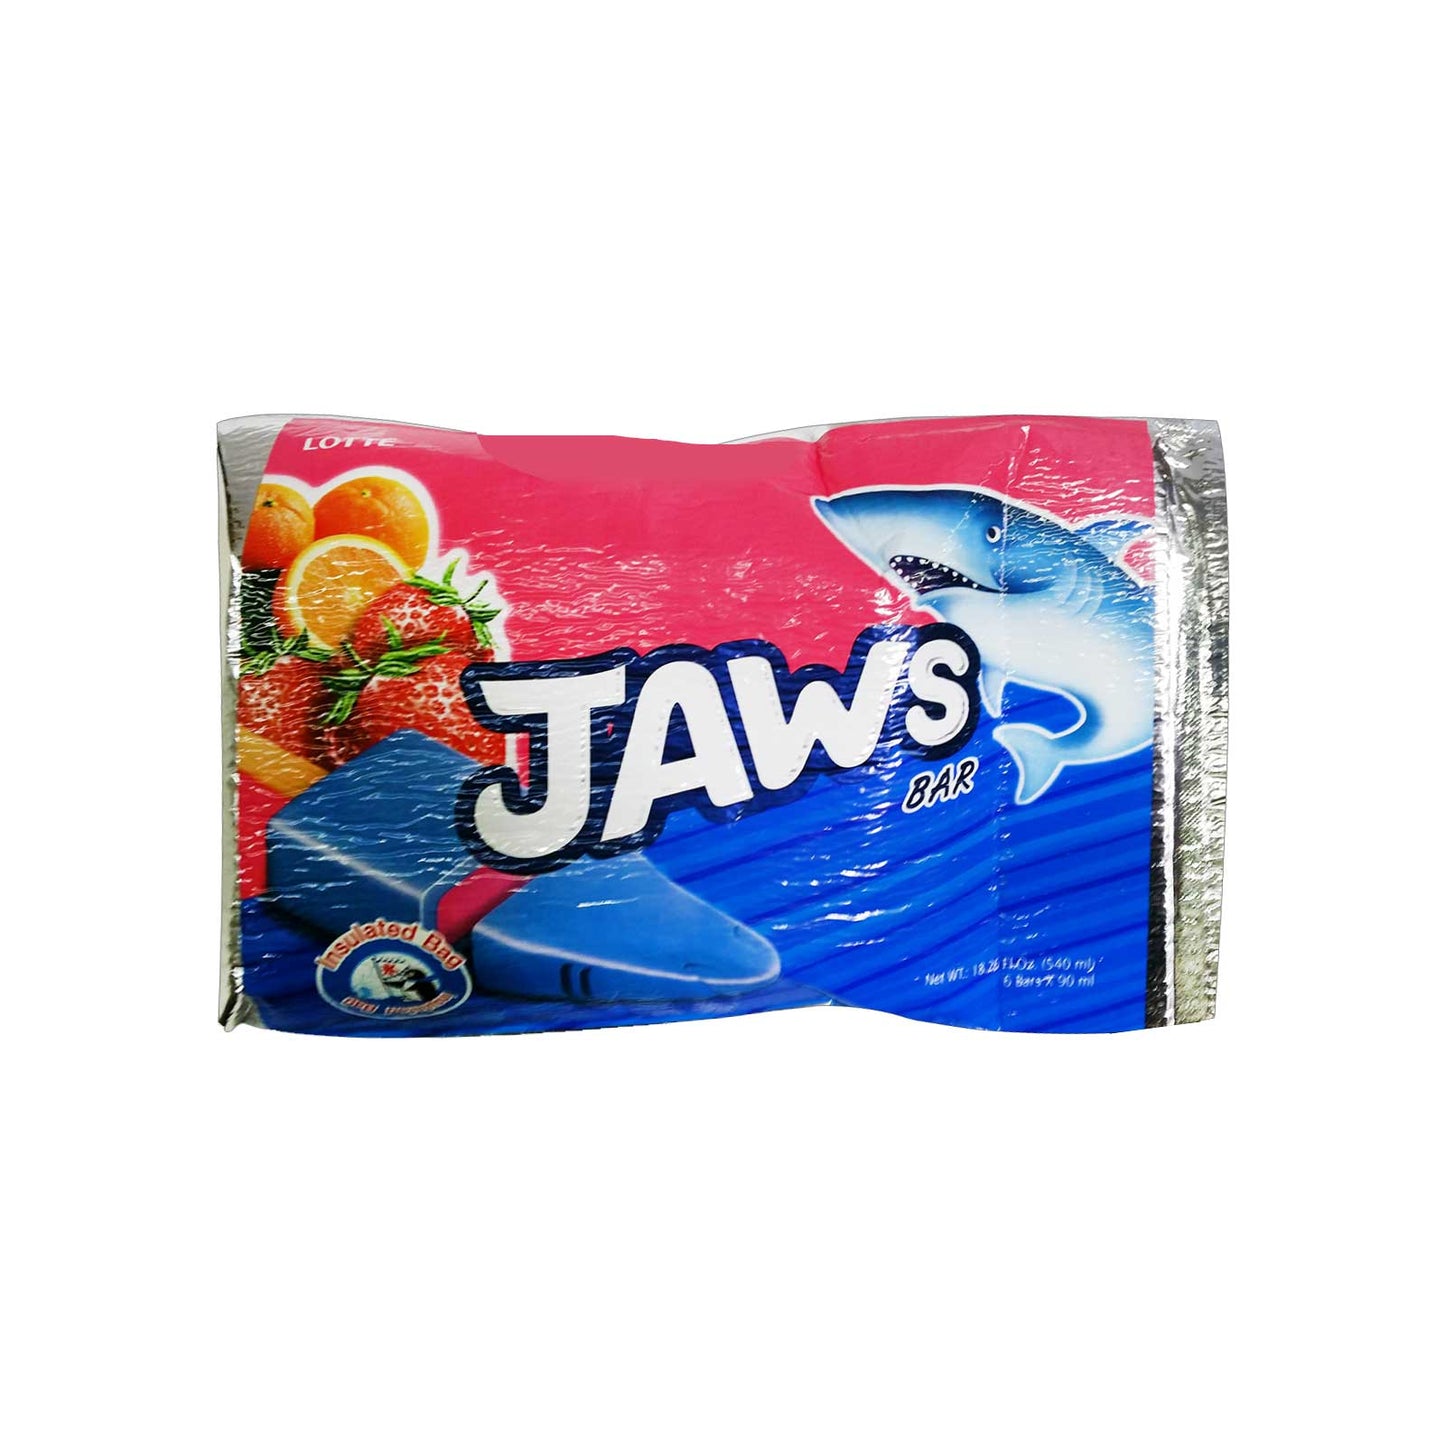 Fzn Ice Cake (Jaws Ice-Bar)(M) 6/6/90ml 죠스바 멀티